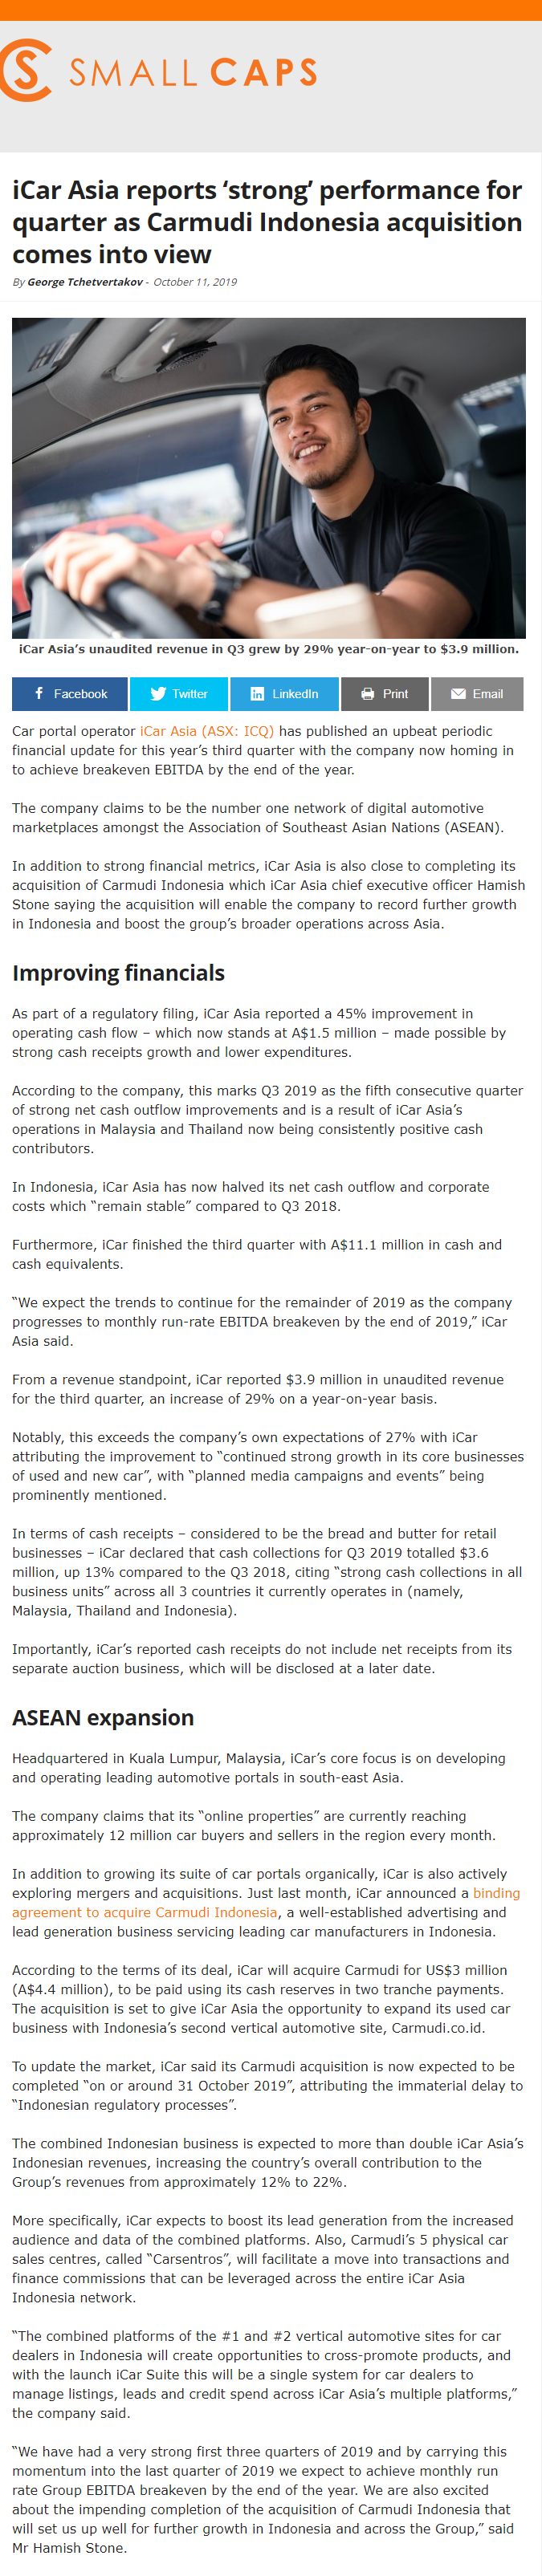 iCarAsia Press Release